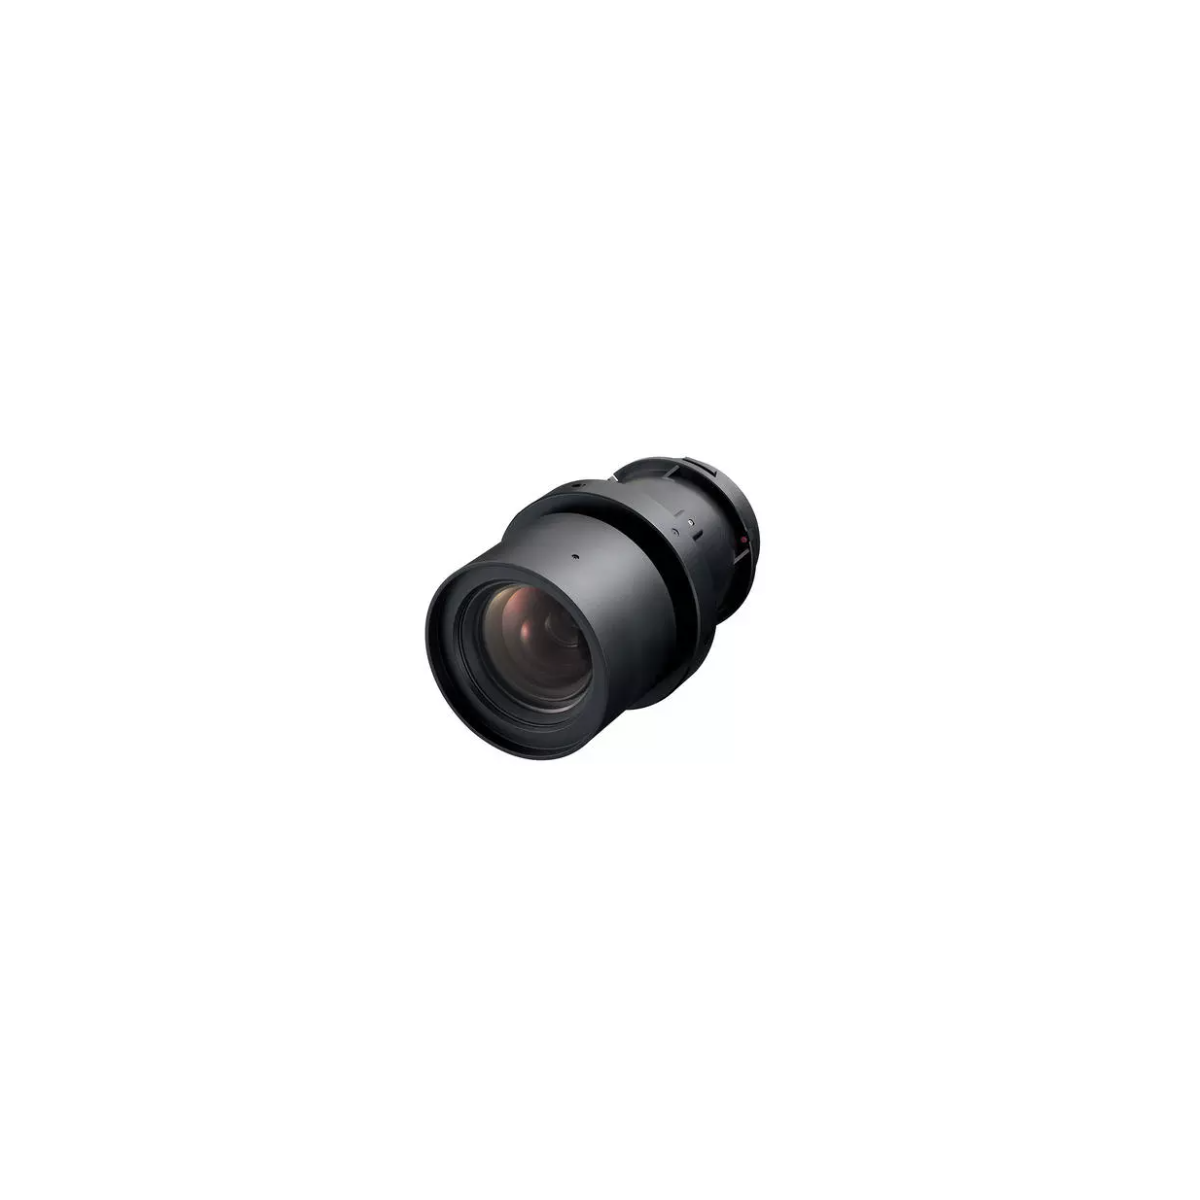 Óptica LCD Lens. Tipo 1.7-2.8:1. Para: PT-EZ770/570 series